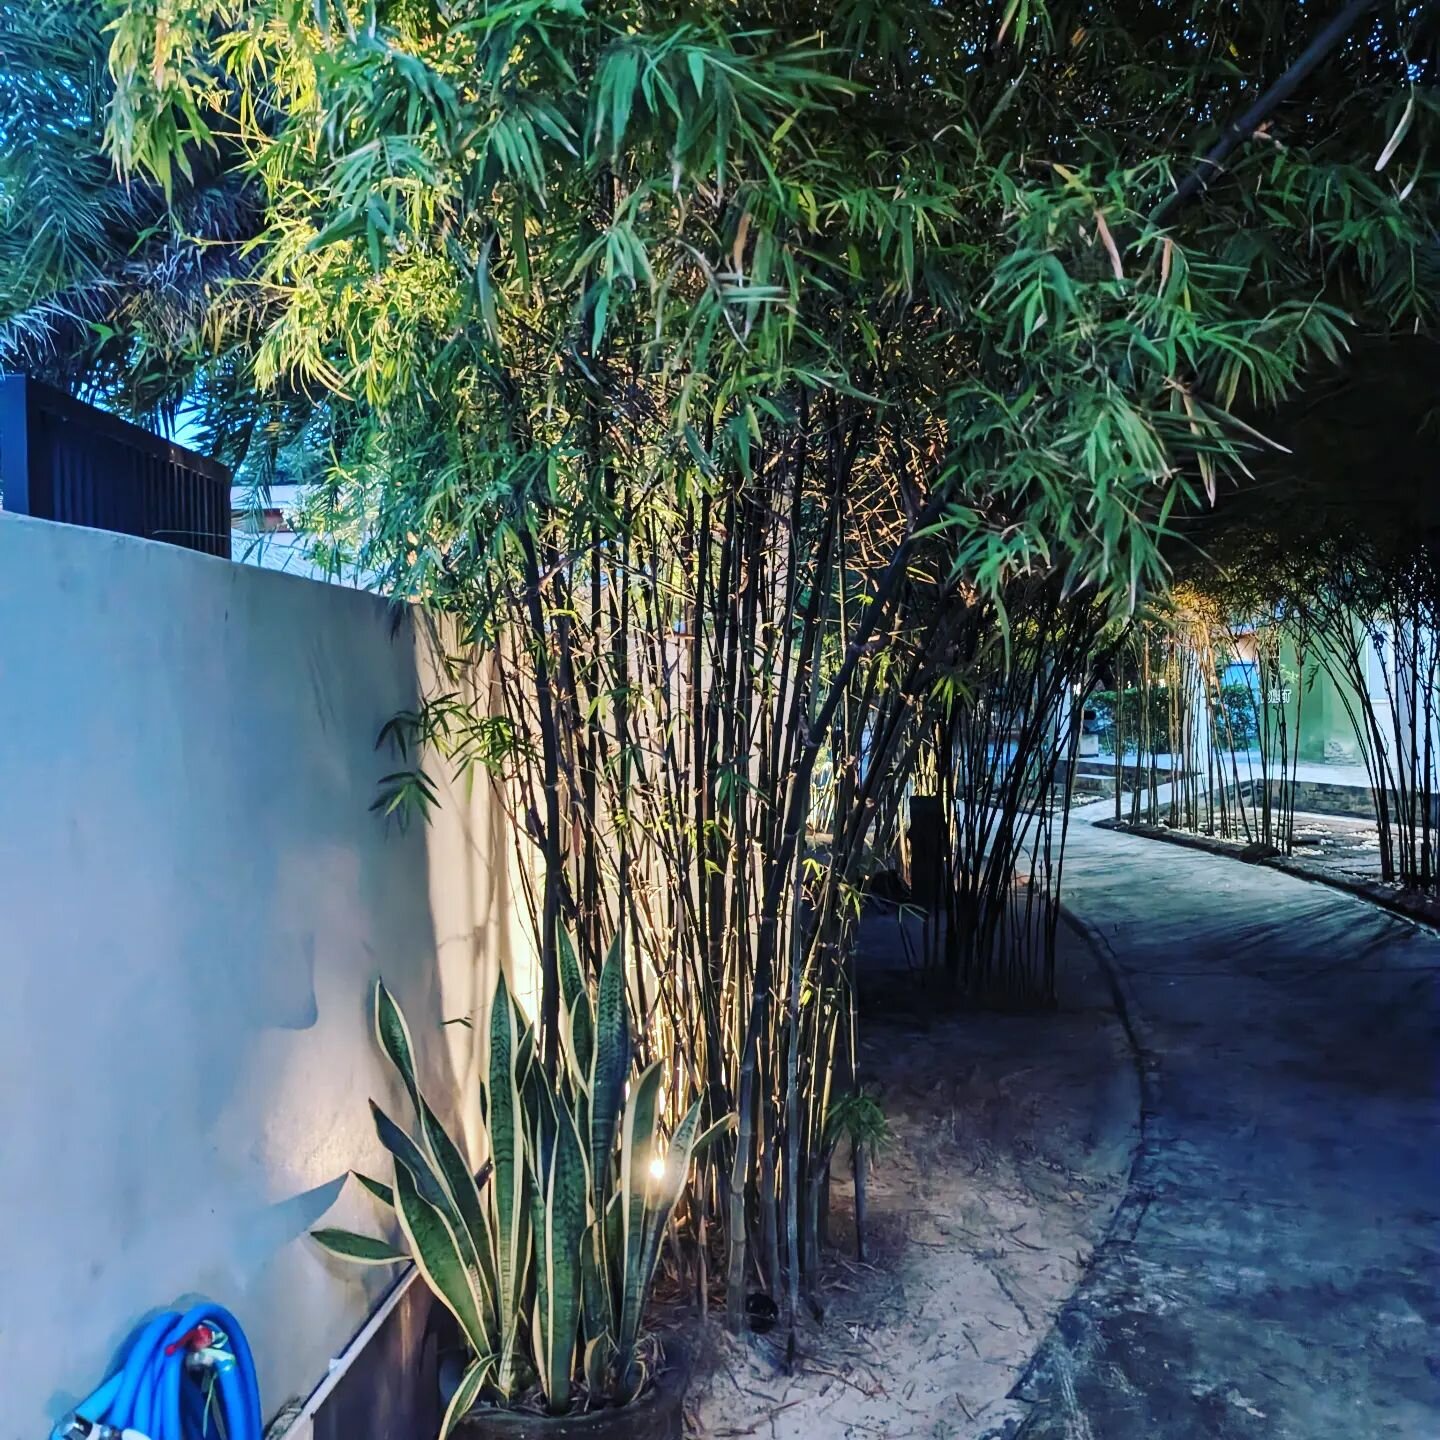 Beautiful bamboo at Ko Phi Phi

#bamboo #bambooforthewin #kohphiphi #ecofriendly #paradise #thailand #sustainable